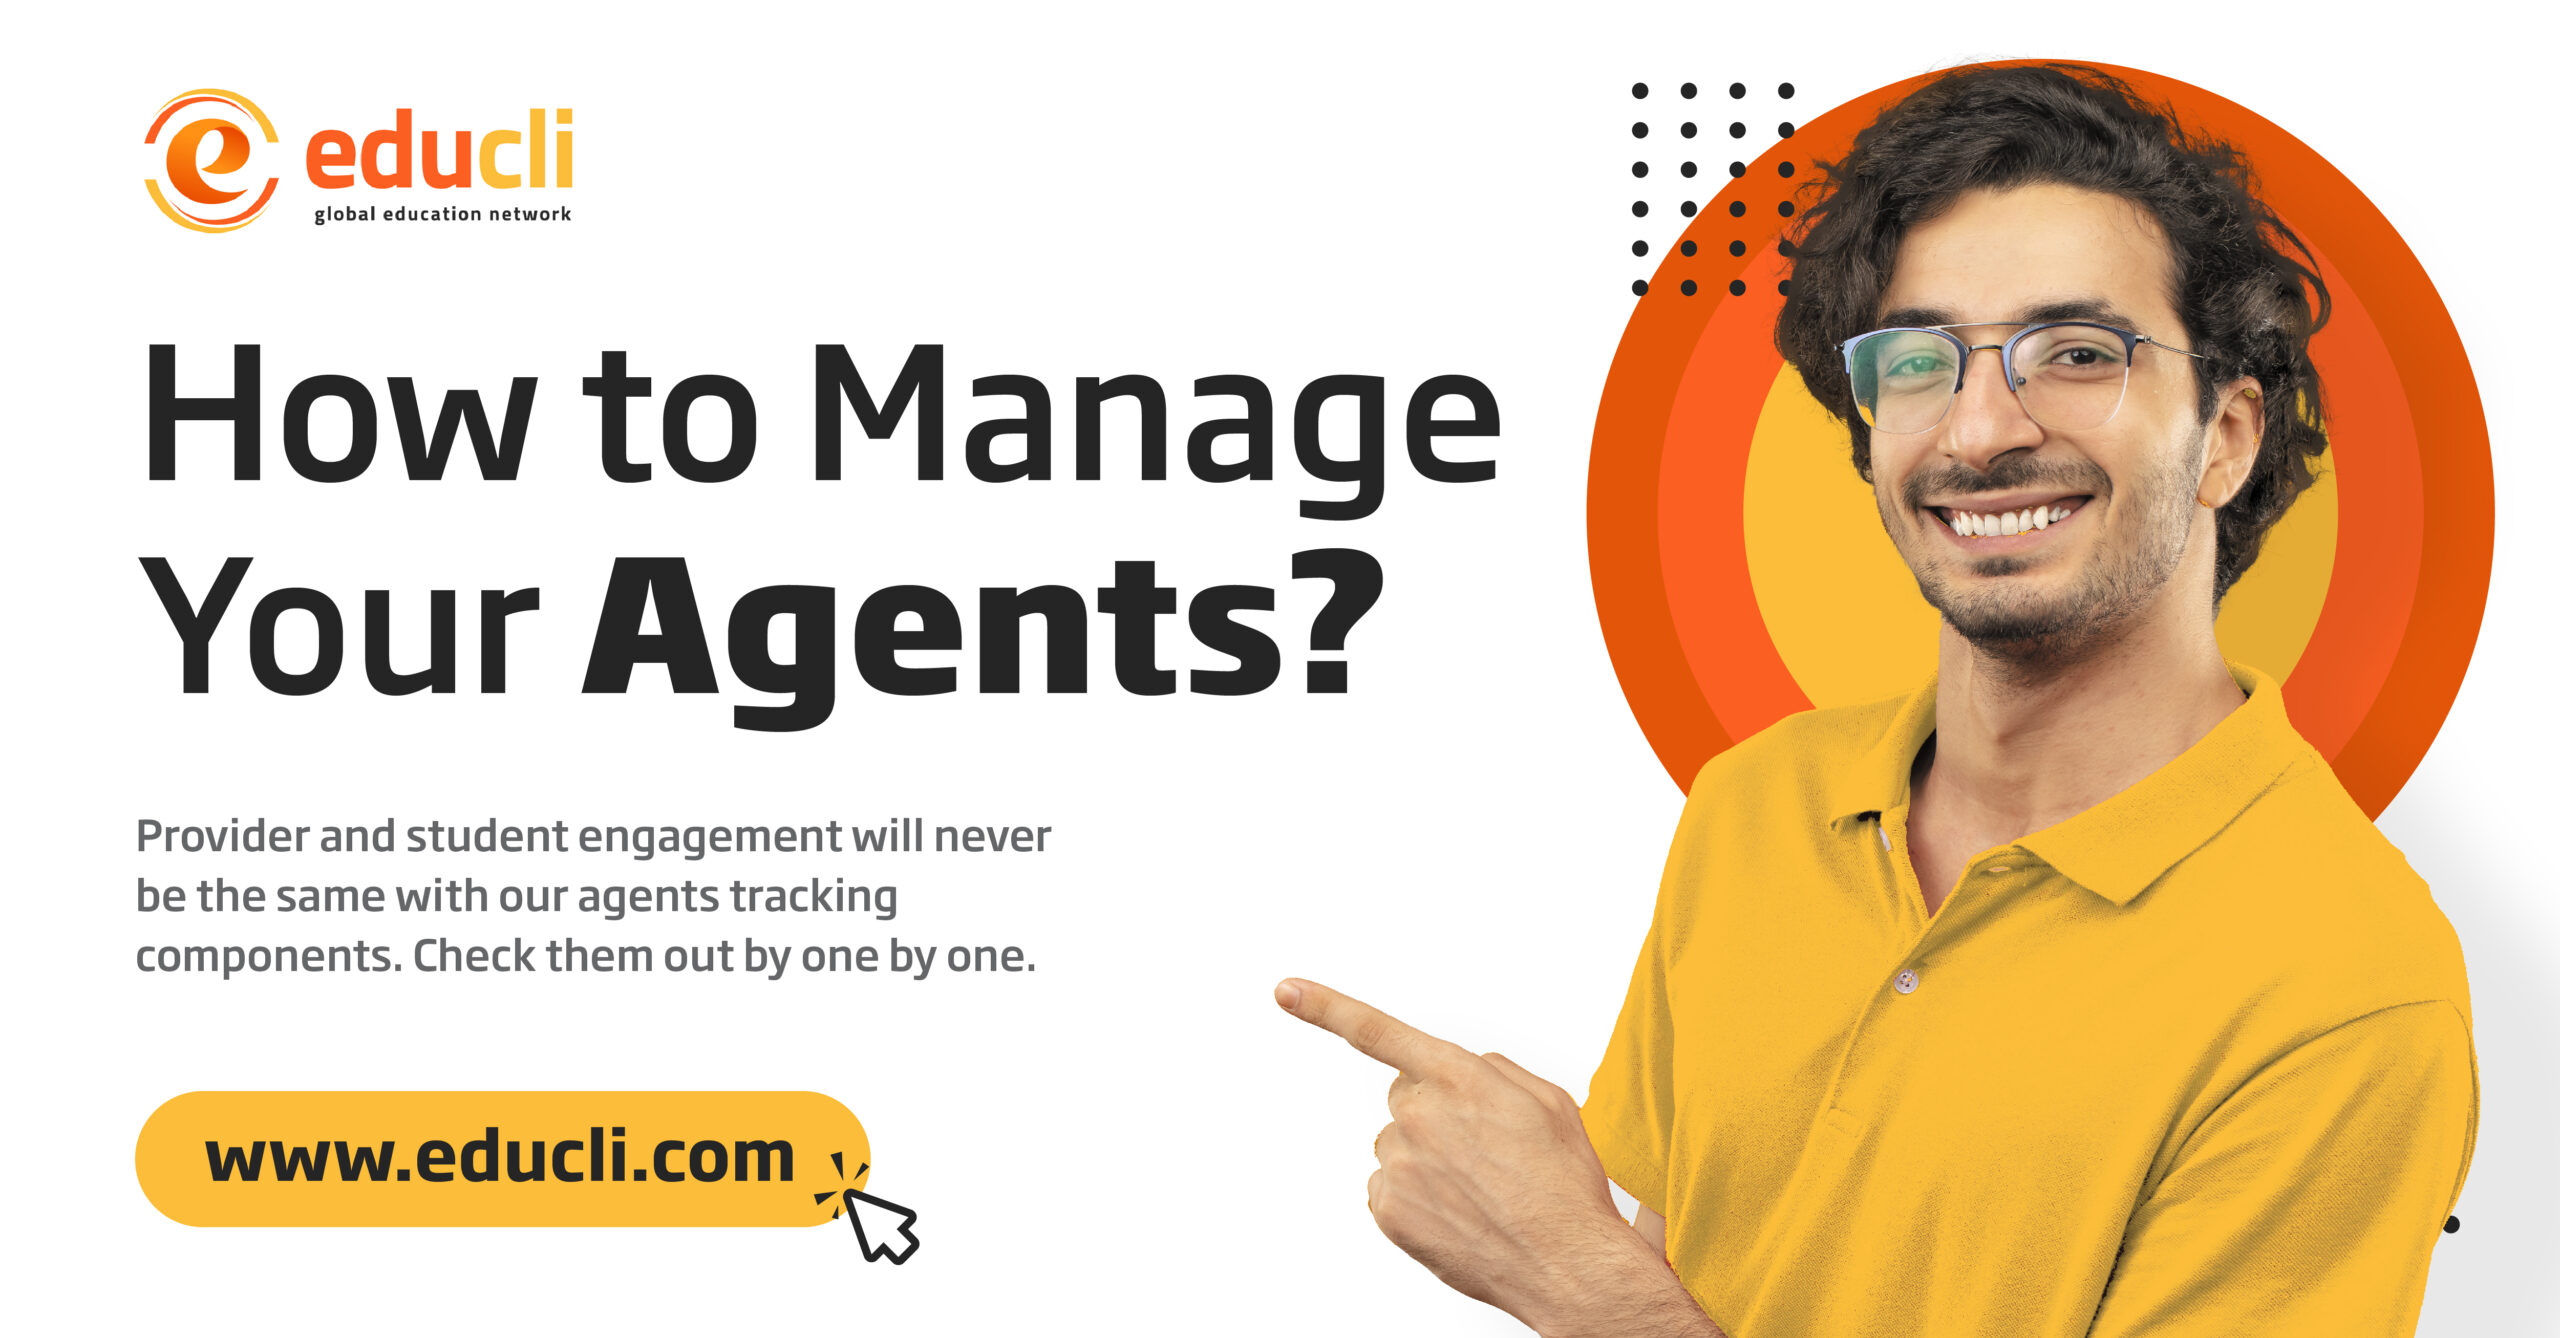 Educli Agents management software